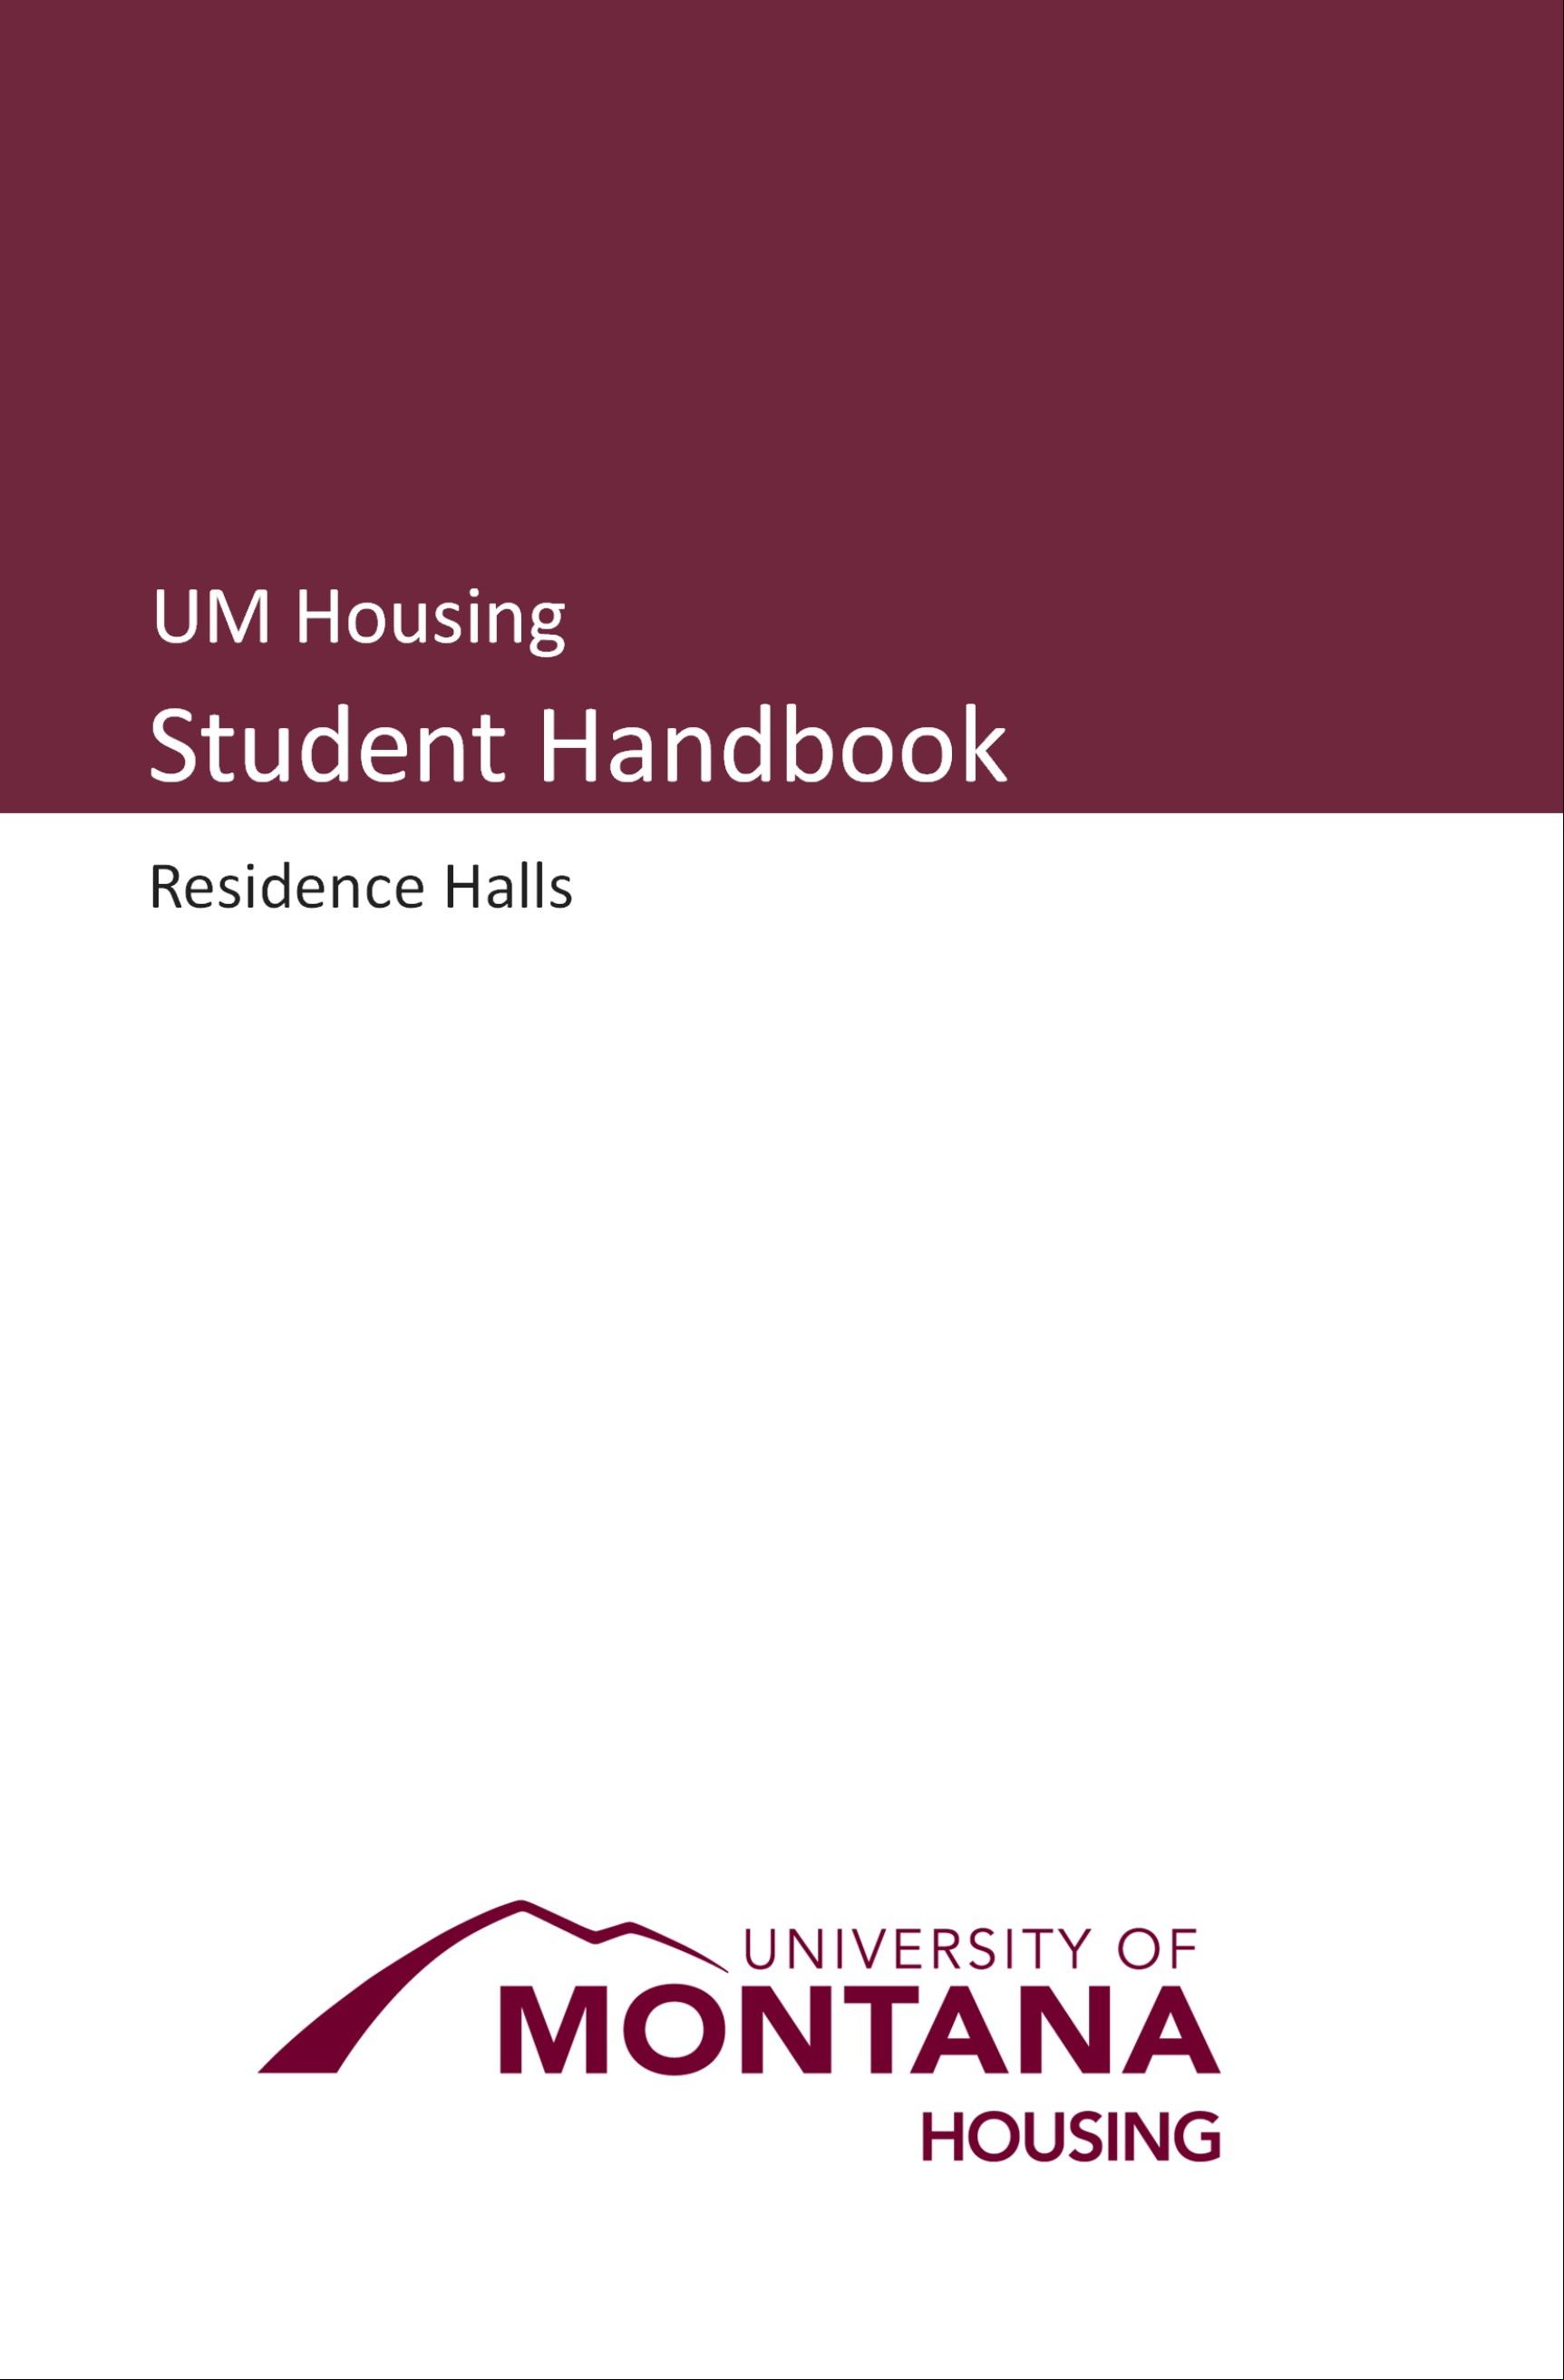 Residence Hall Handbook